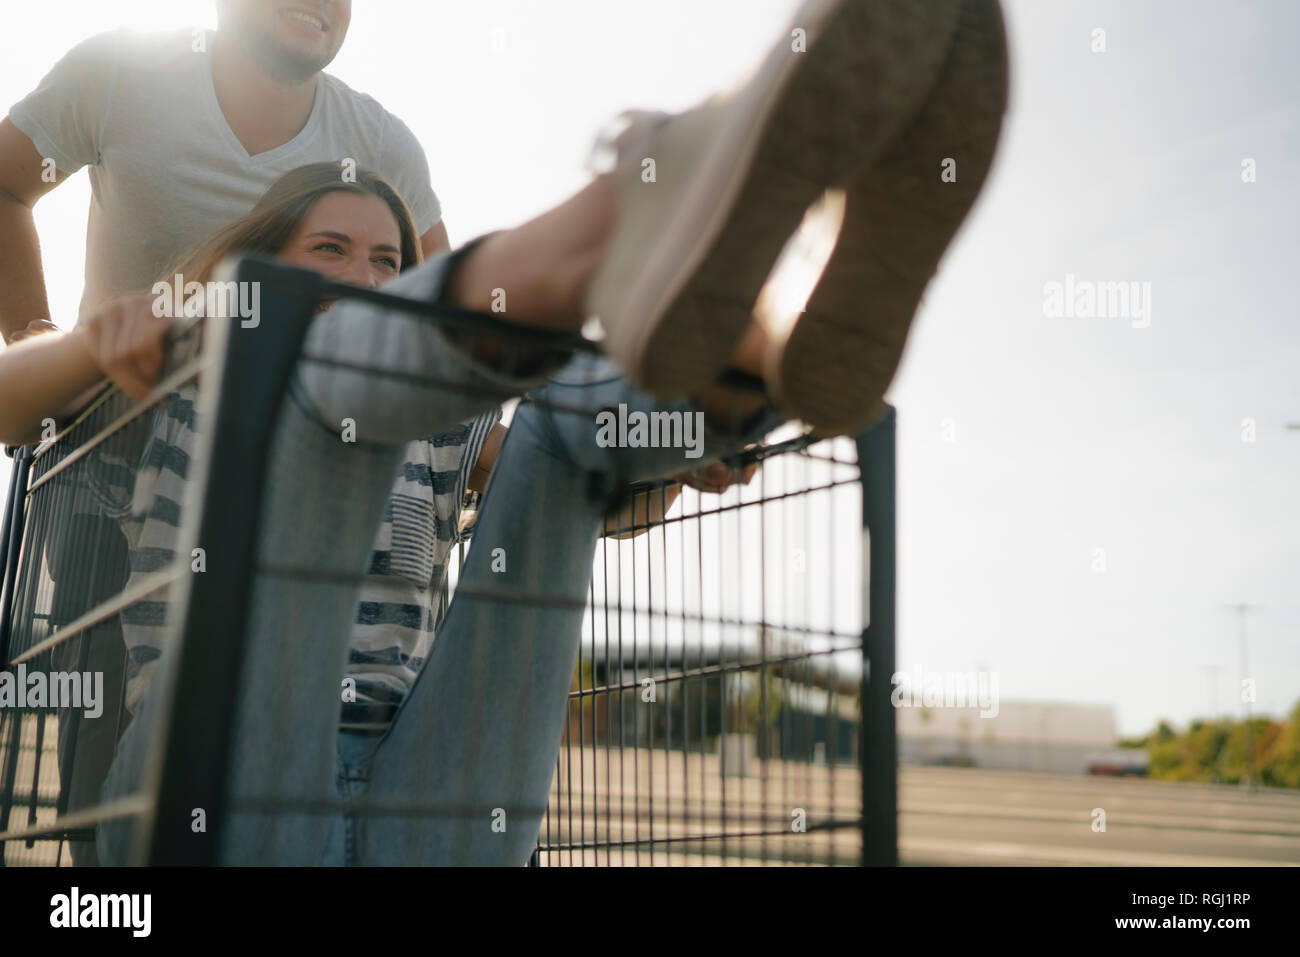 Carefree young man pushing girlfriend in a shopping cart Stock Photo